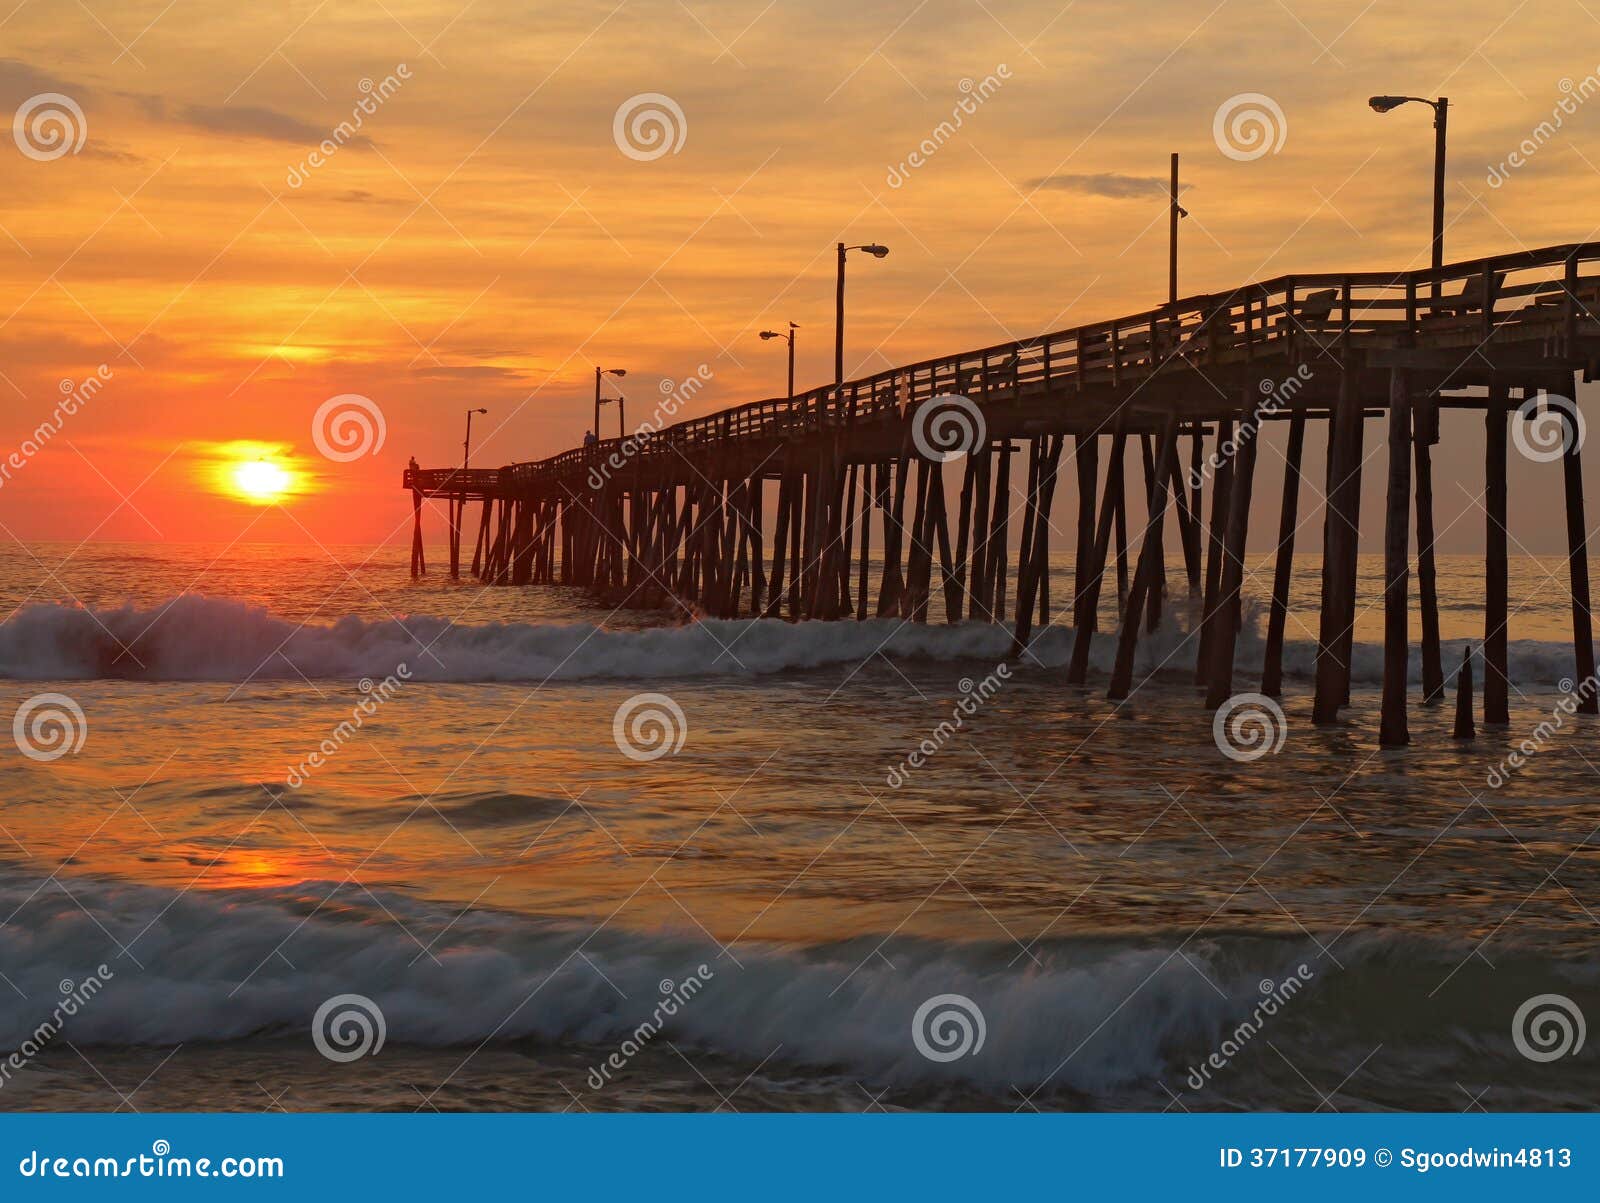 sunrise by a fishing pier in north carolina